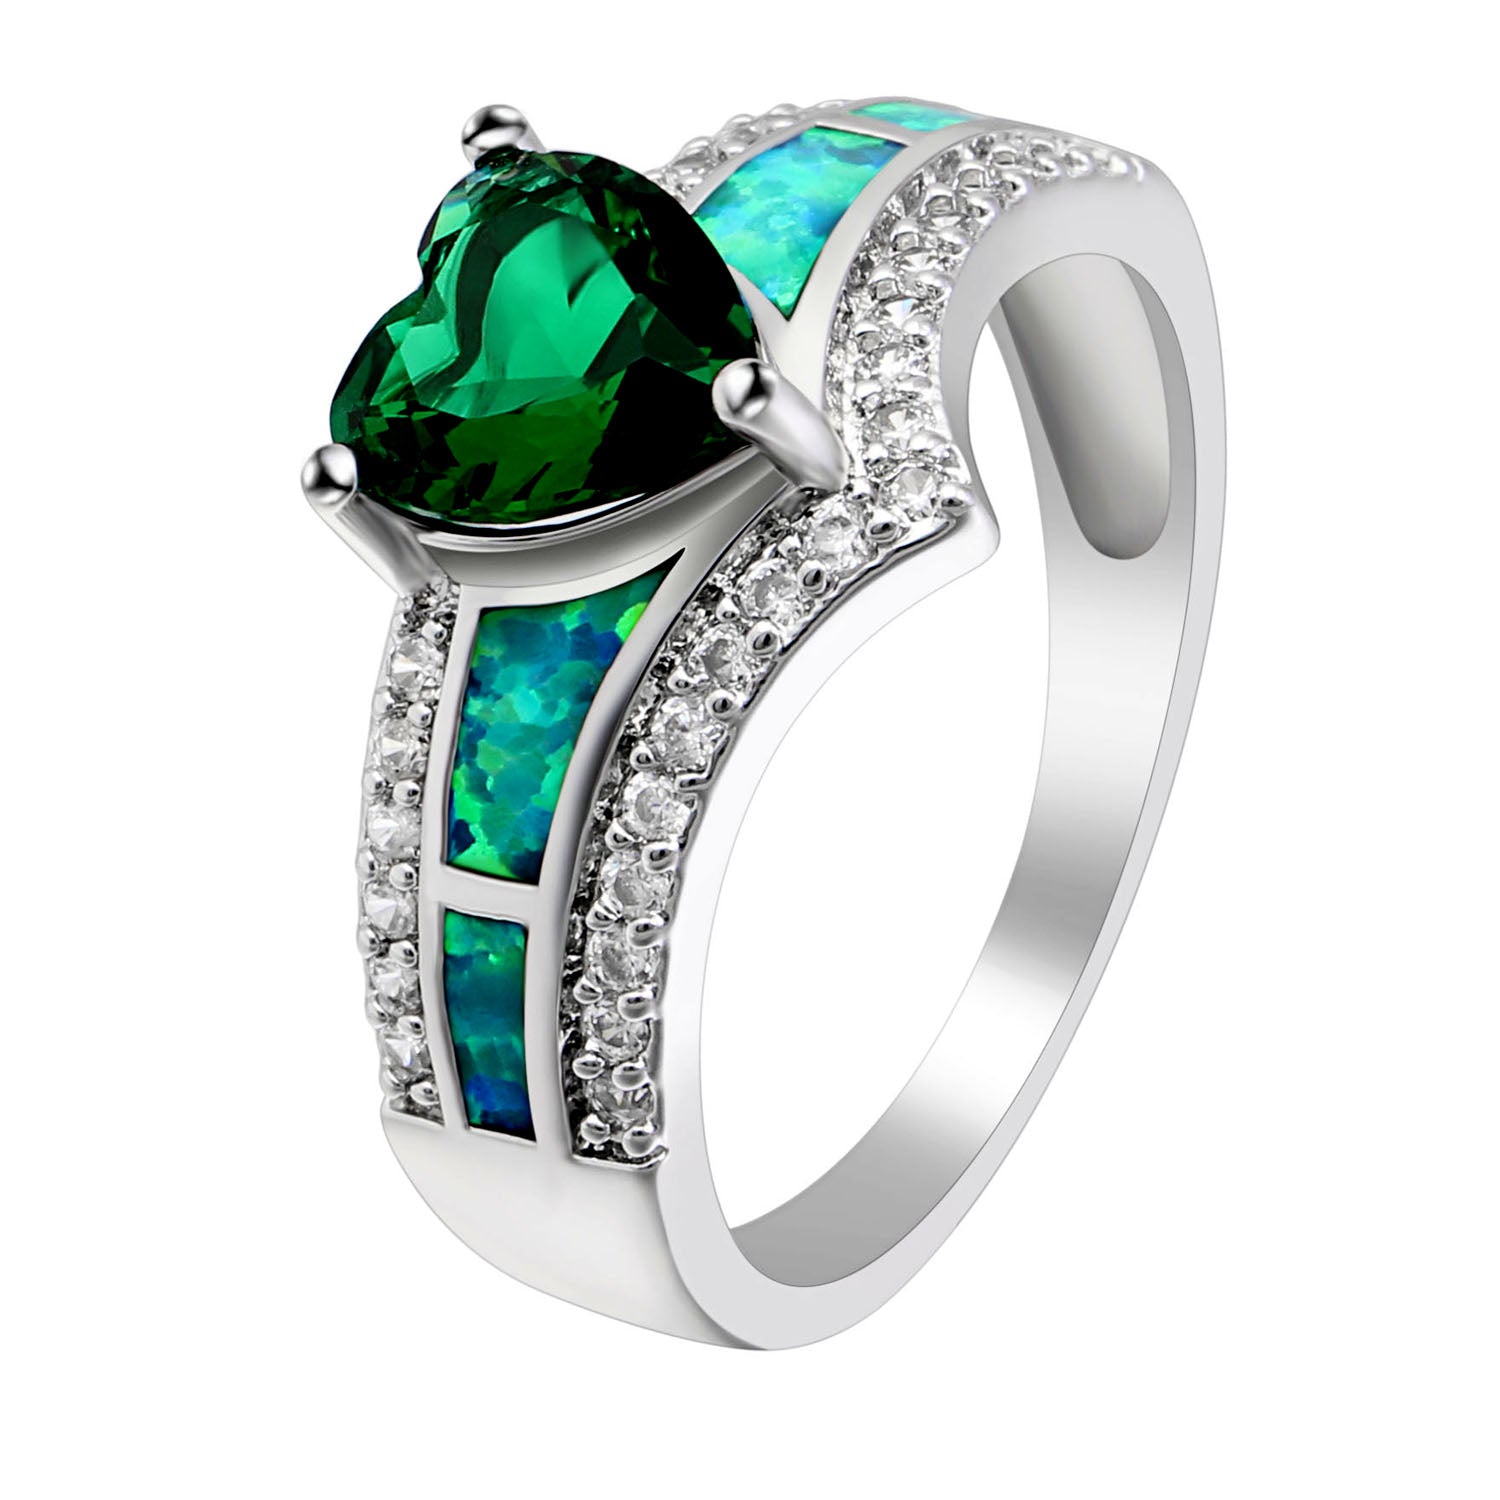 Majestic Heart Cz Promise Ring Created Fire Opal Girl Women Ginger Lyne - Green,6